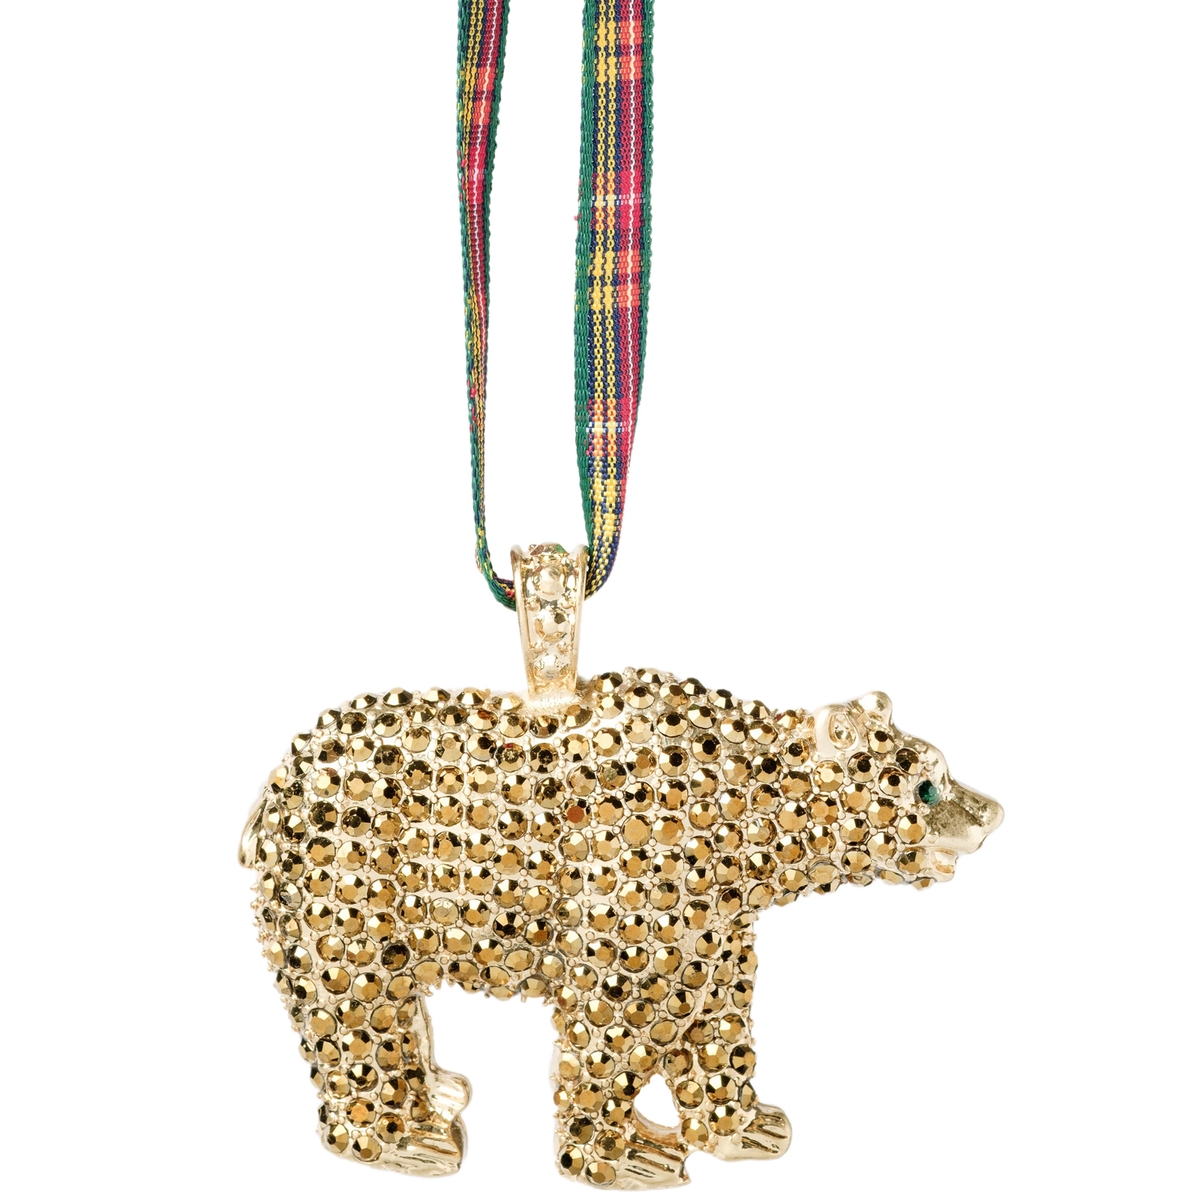 Bear Hanging Ornament